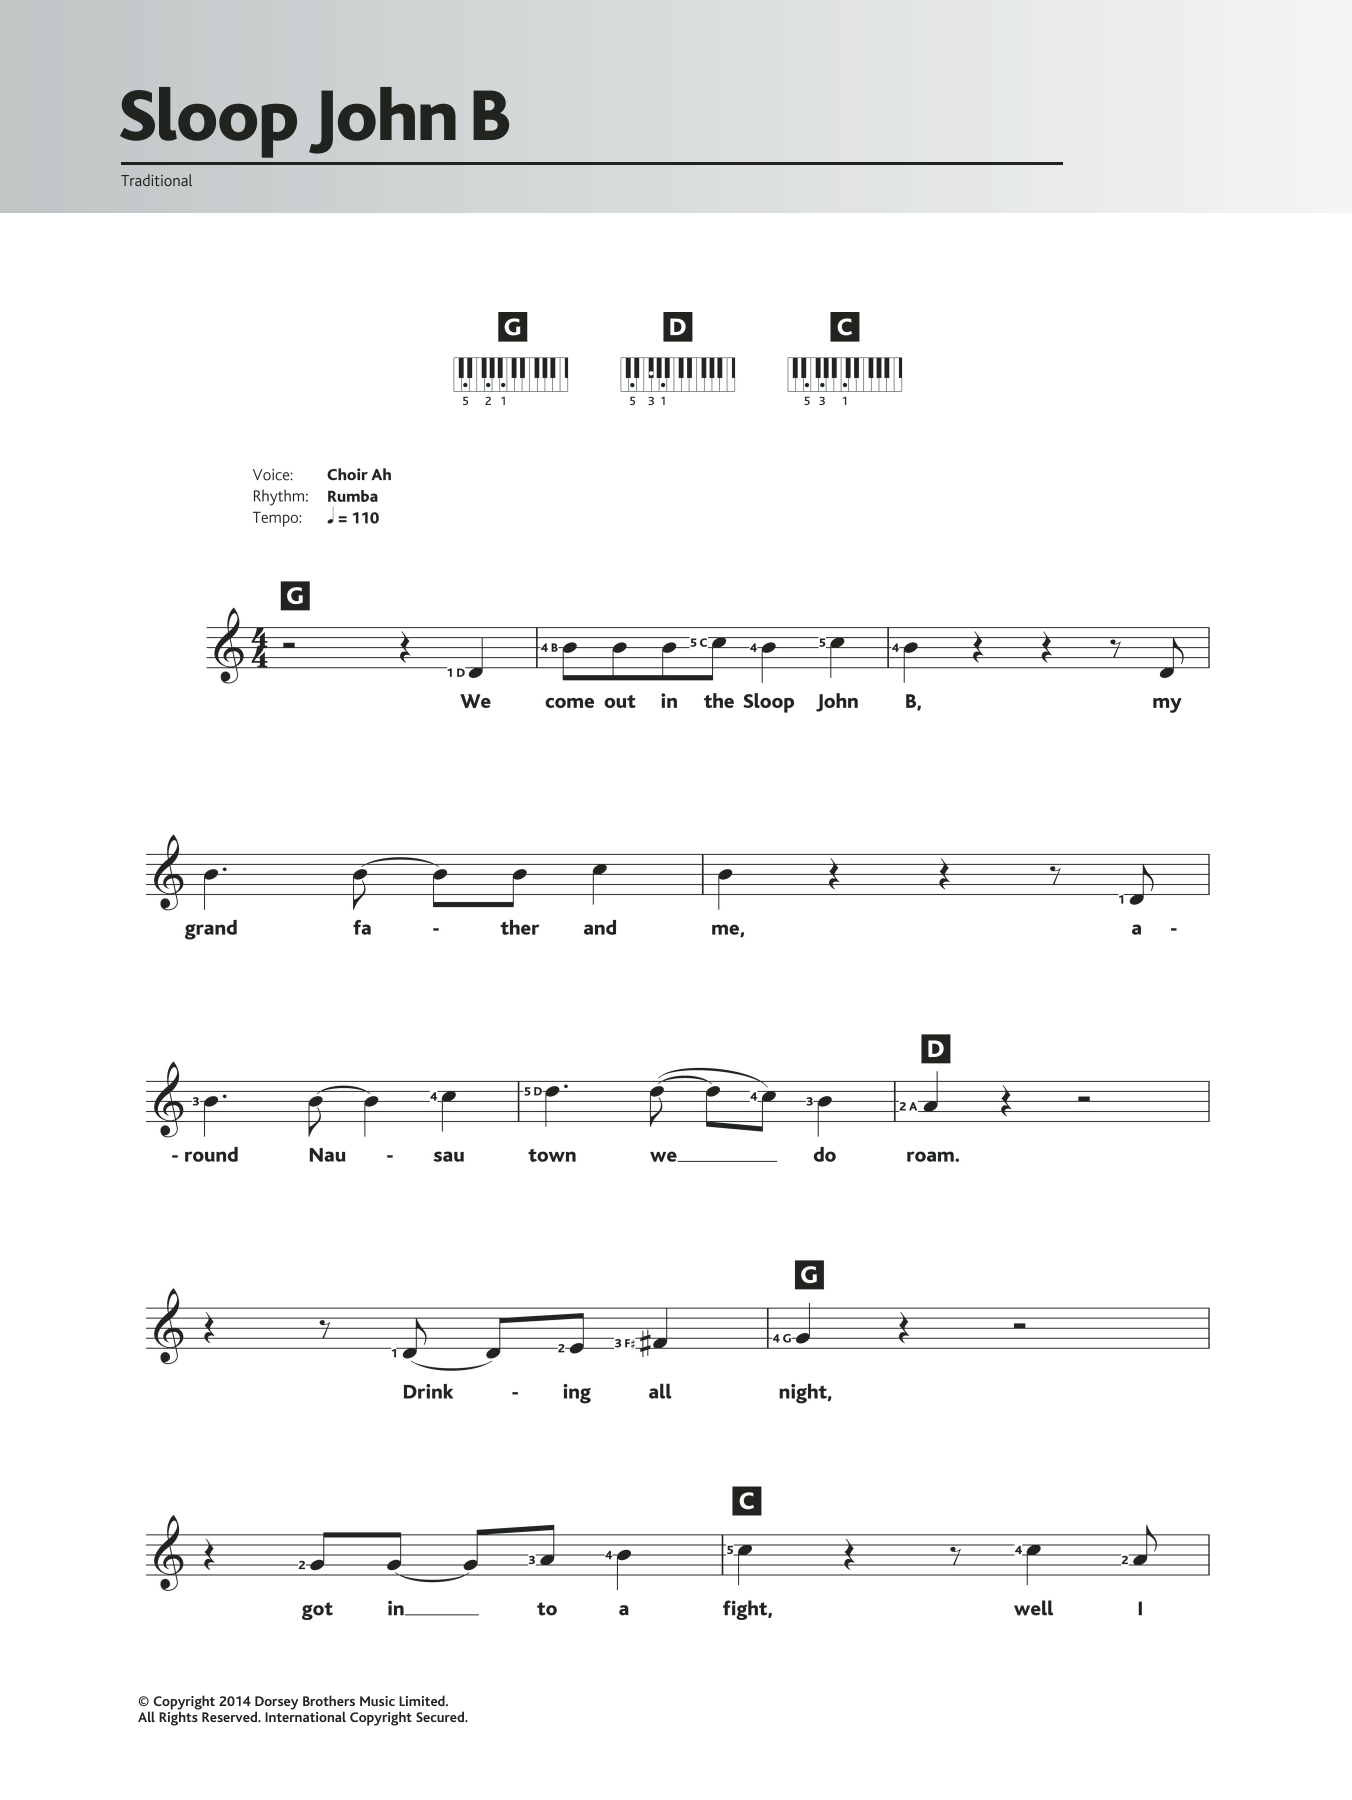 Traditional Sloop John B Sheet Music Notes & Chords for Keyboard - Download or Print PDF